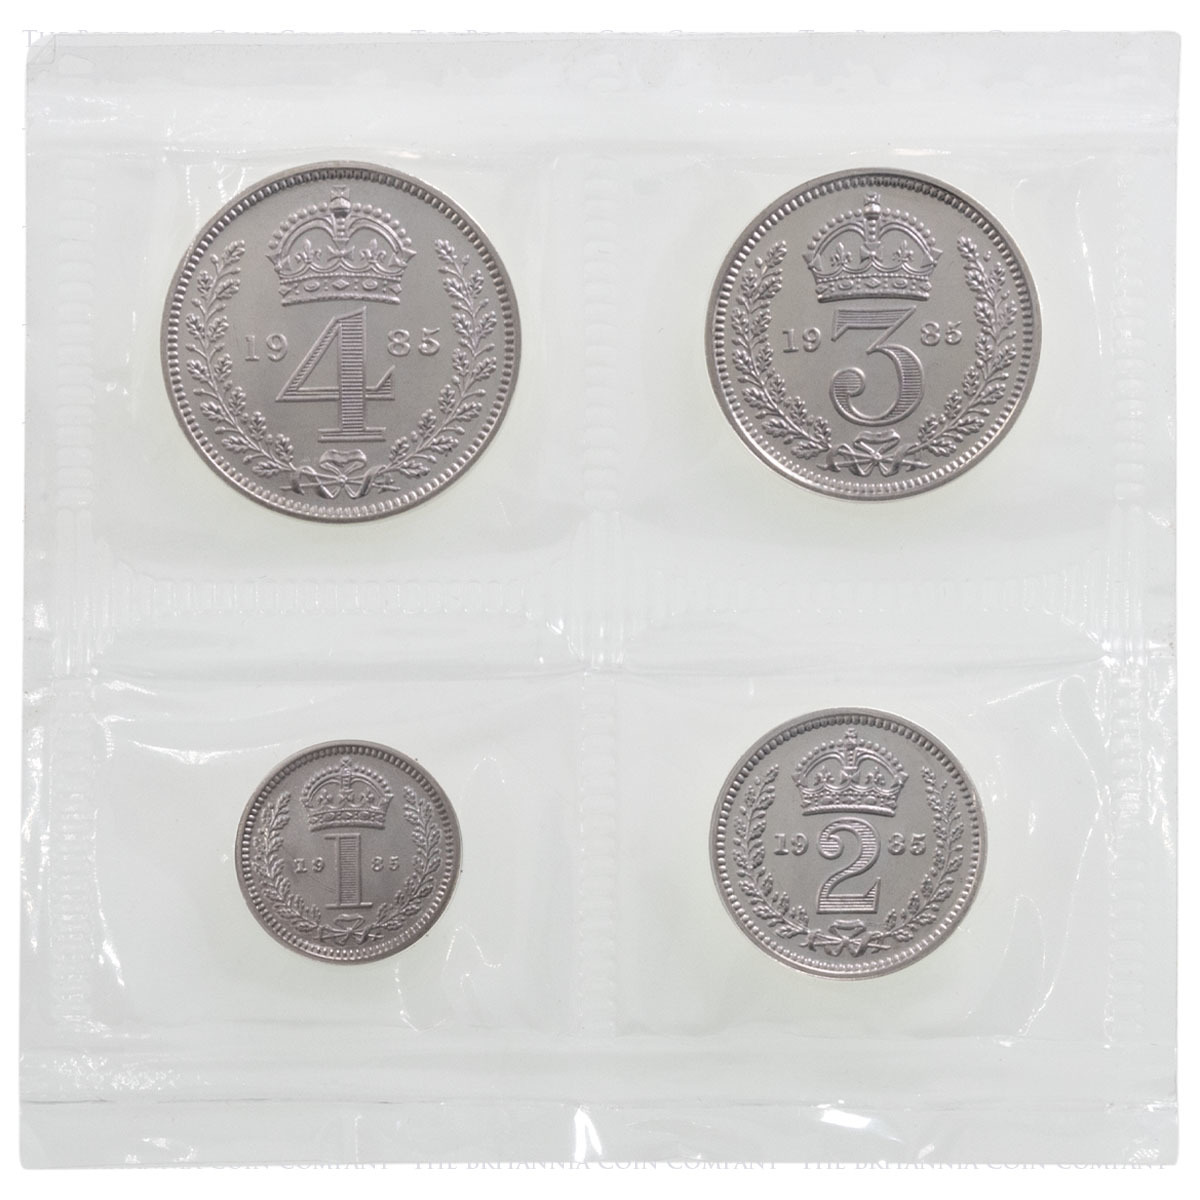 1985 Queen Elizabeth II Royal Maundy Money Silver Complete Presentation Set Ripon Reverses